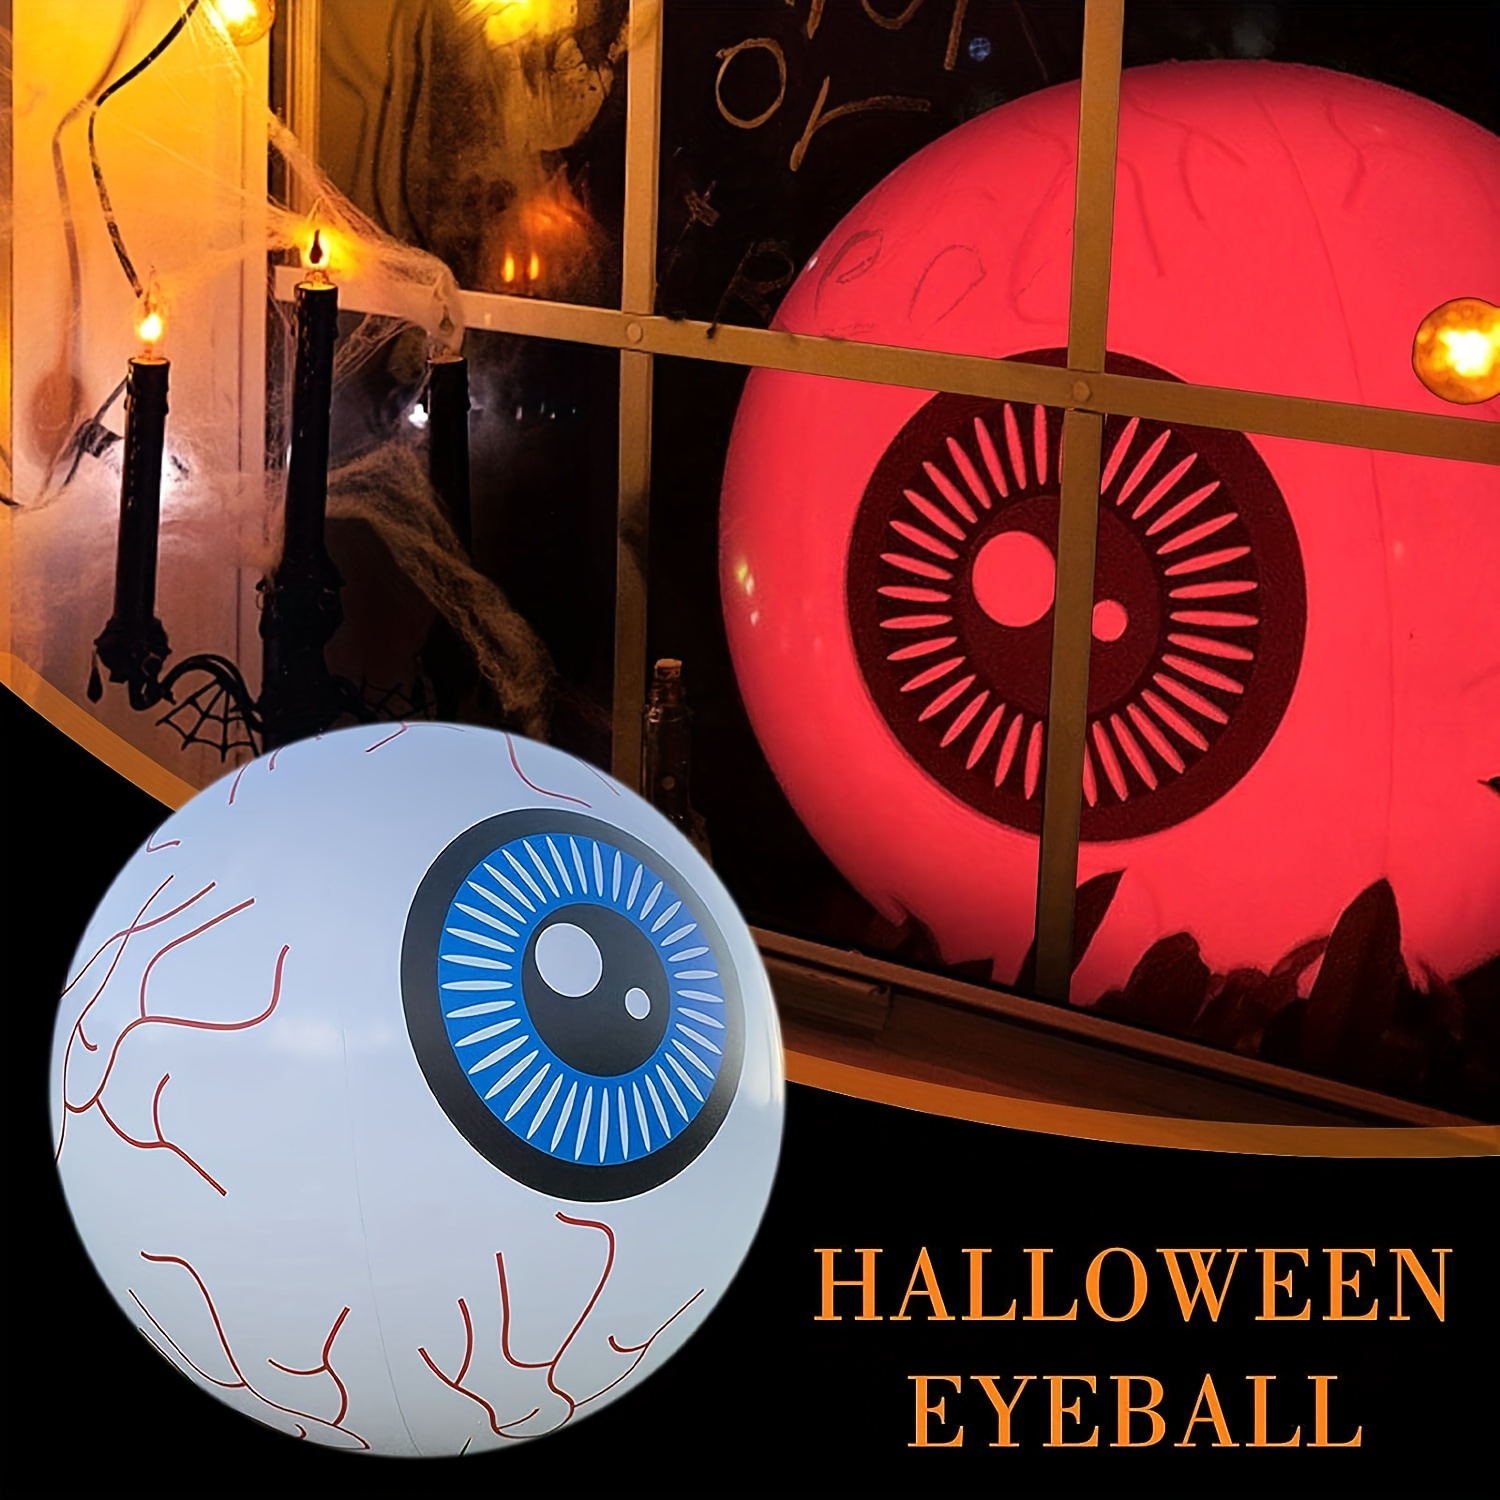 Eyeball Halloween Decorations  Halloween Scary Eyes Balls - Party &  Holiday Diy Decorations - Aliexpress